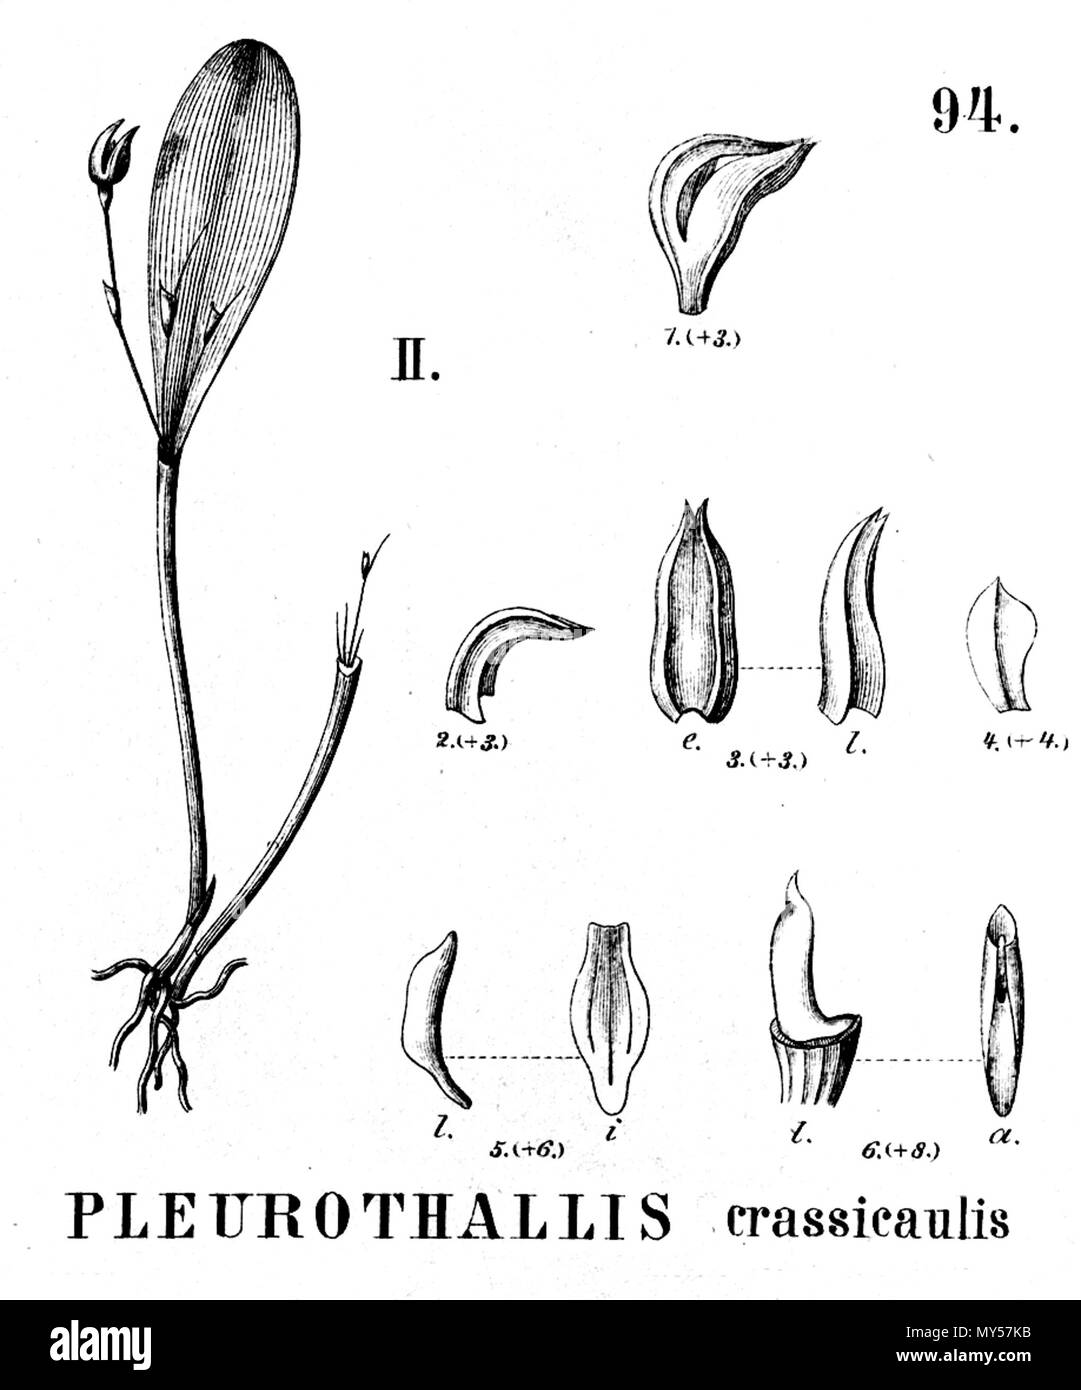 . Illustration of Pleurothallis crassicaulis . 1896. Alfred Cogniaux (1841 - 1916) 426 Pleurothallis crassicaulis - cutout from Flora Brasiliensis 3-4-94 fig II Stock Photo